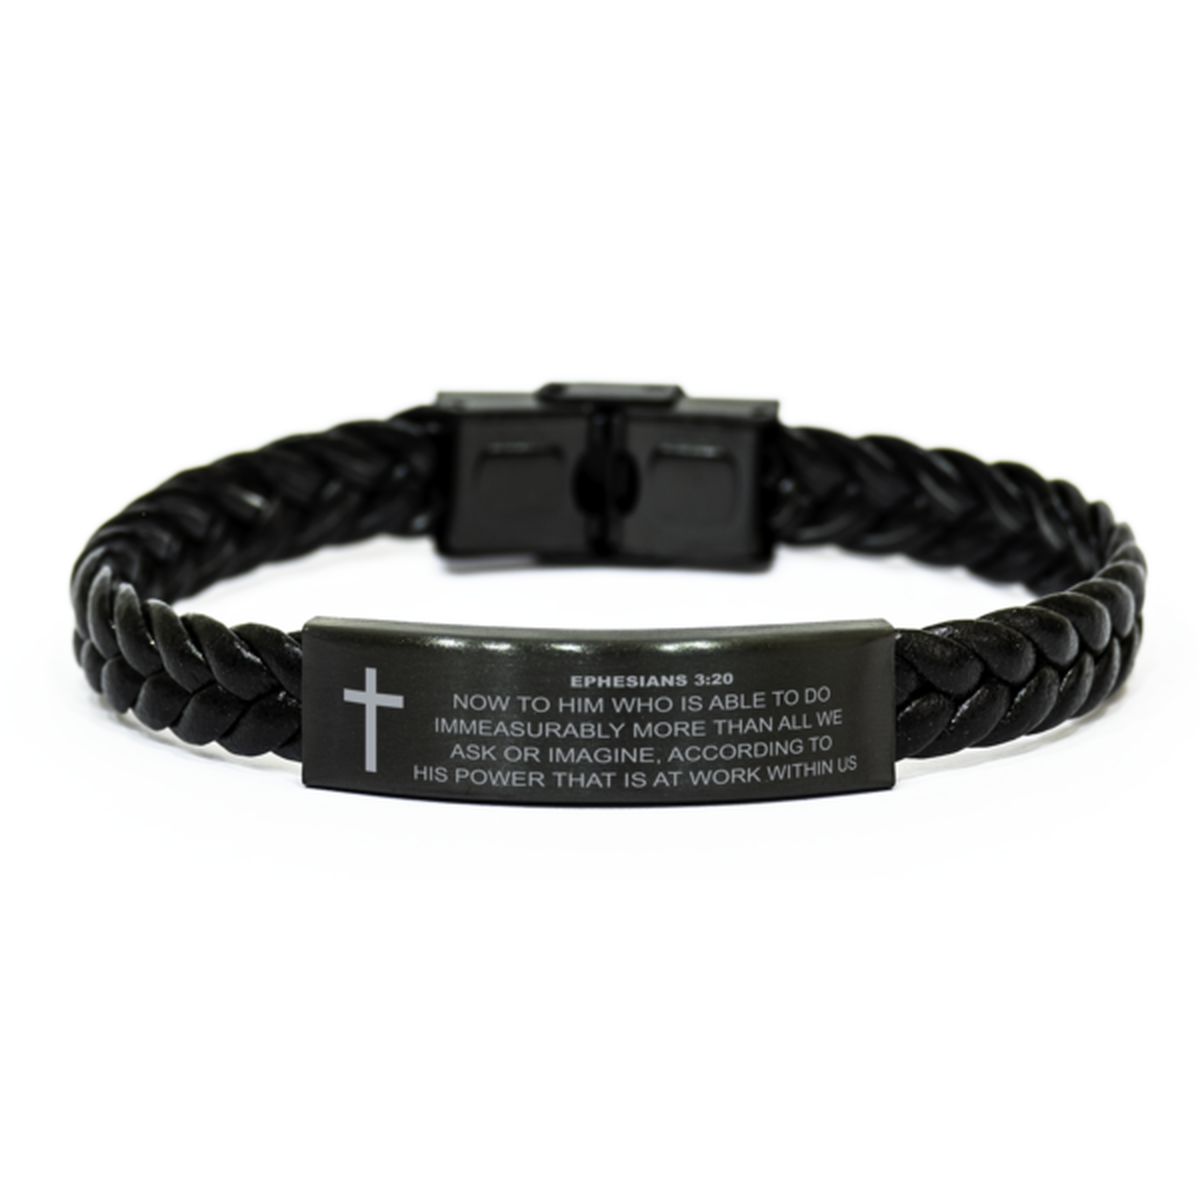 Ephesians 3:20 Bracelet, Now To Him Who Is Able To Do Immeasurably More, Bible Verse Bracelet, Christian Bracelet, Braided Leather Bracelet